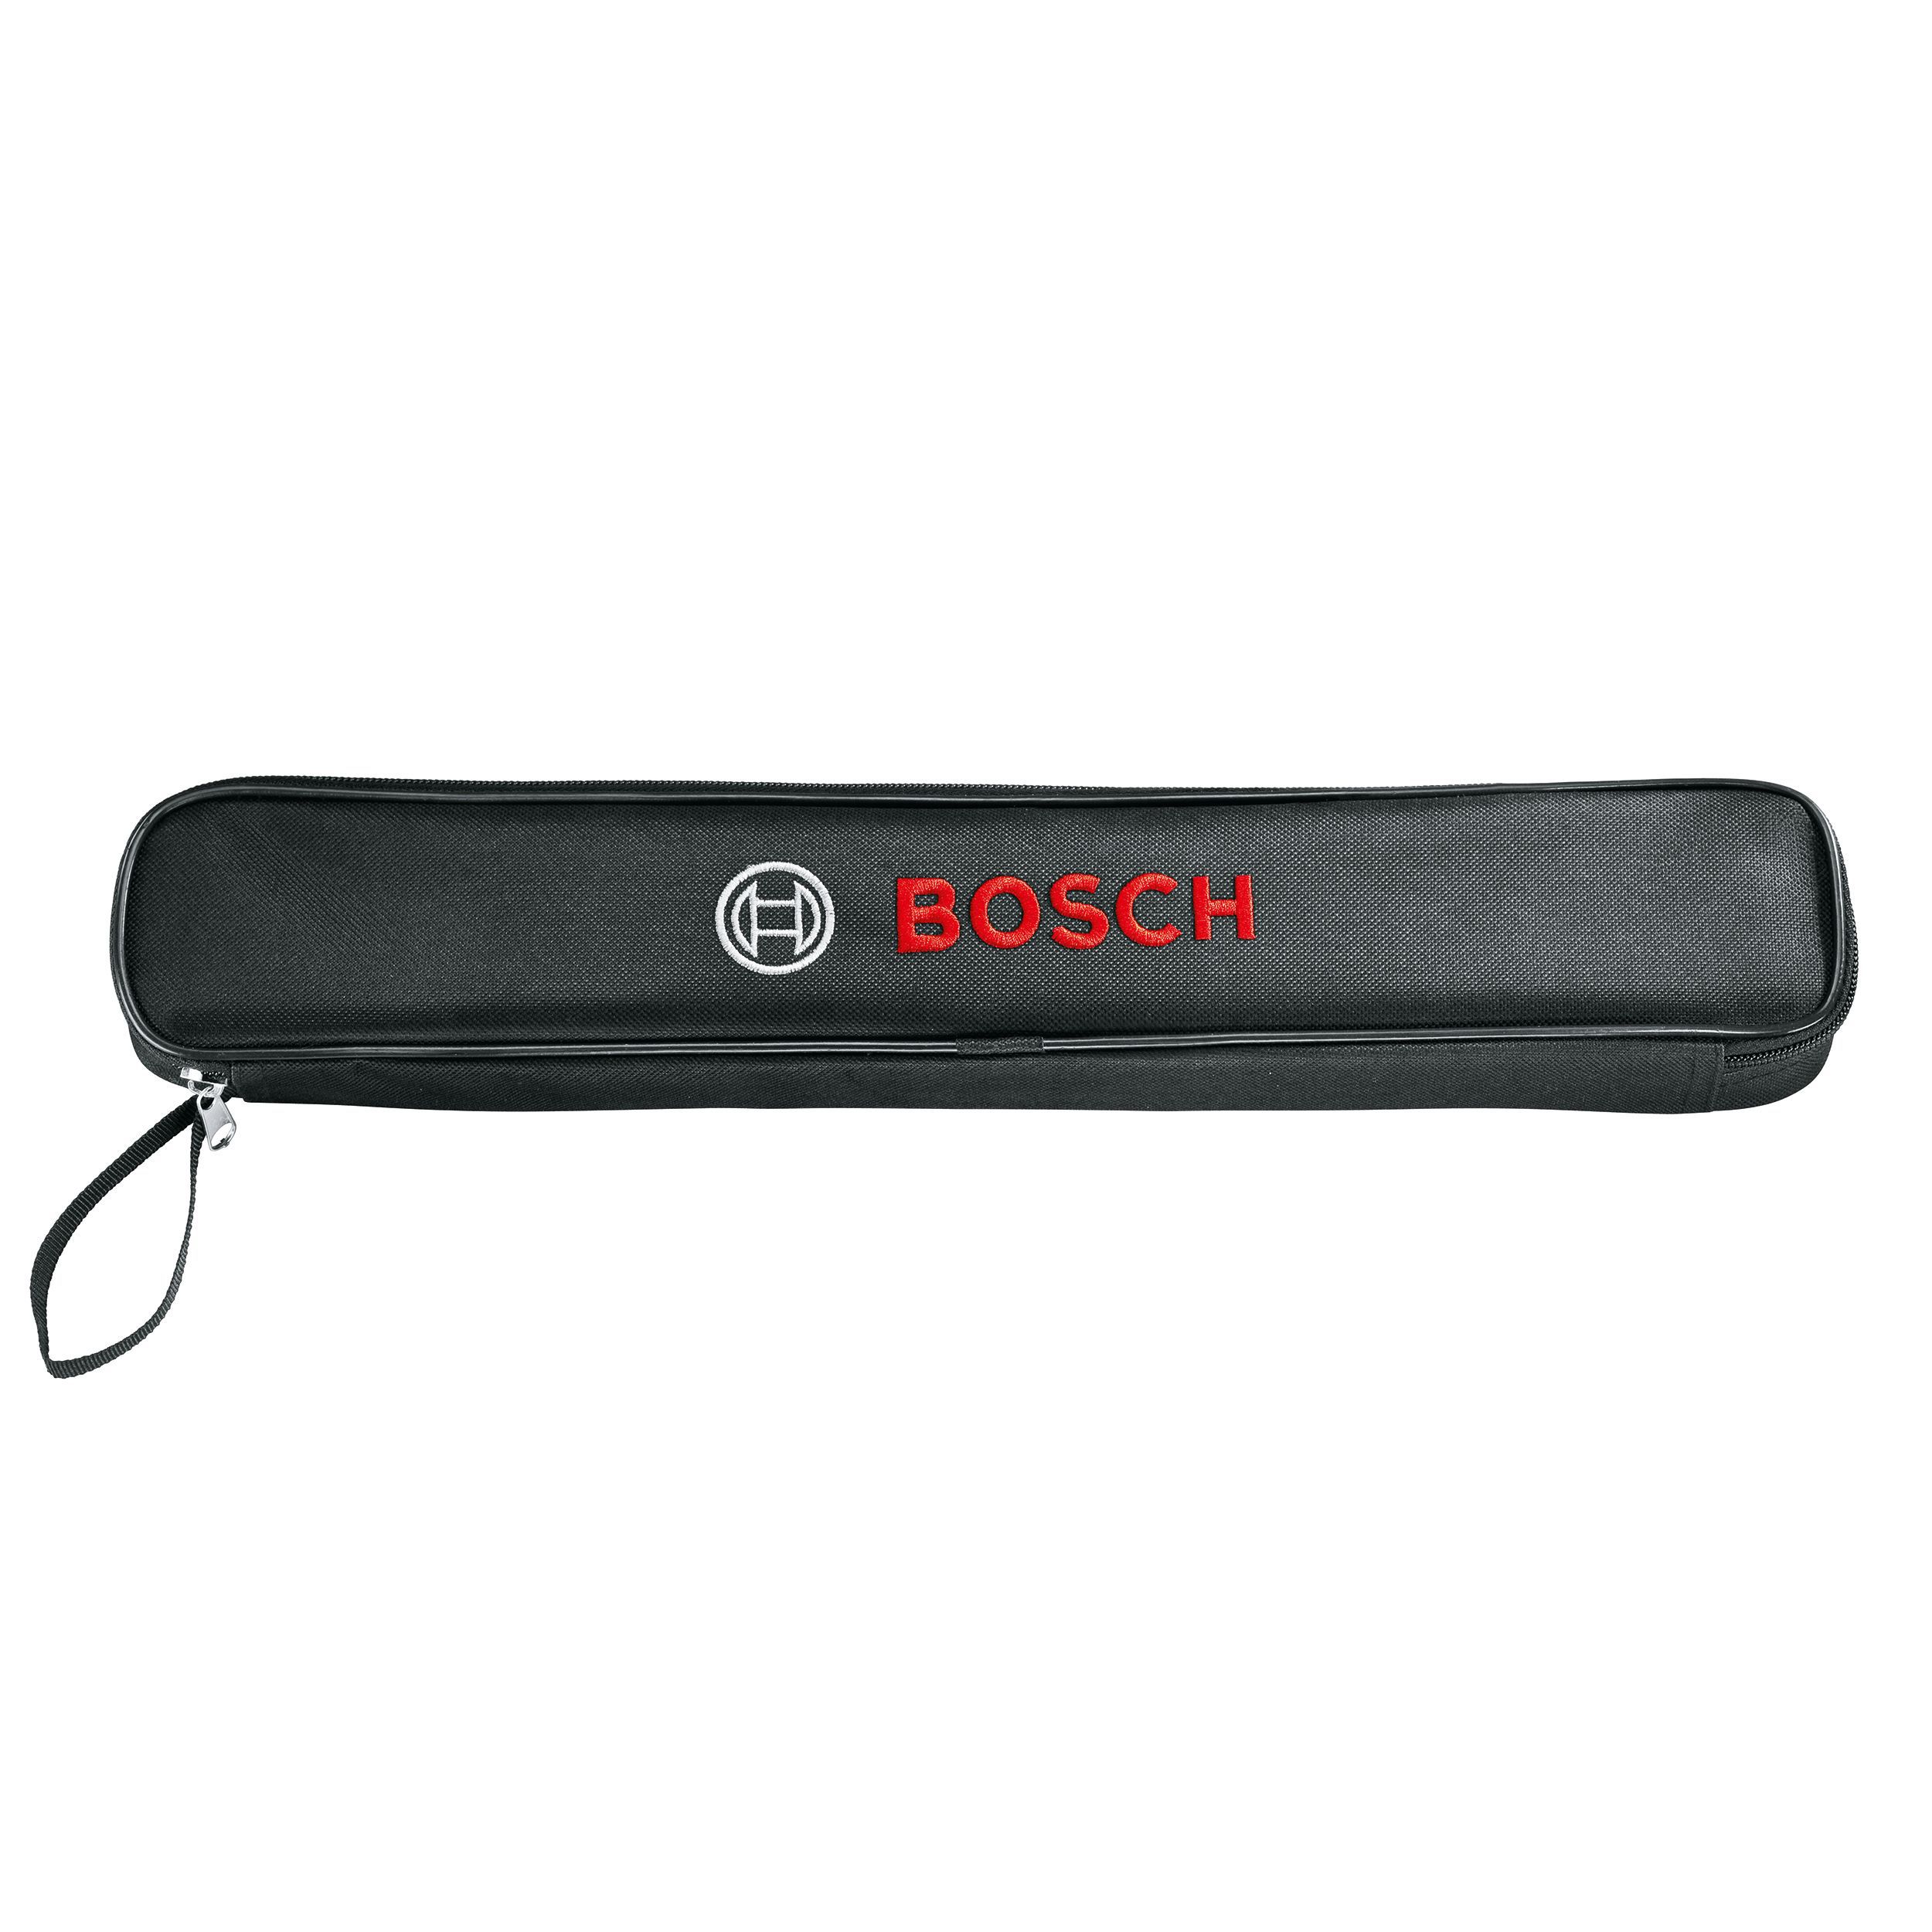 Bosch Digital angle measurer